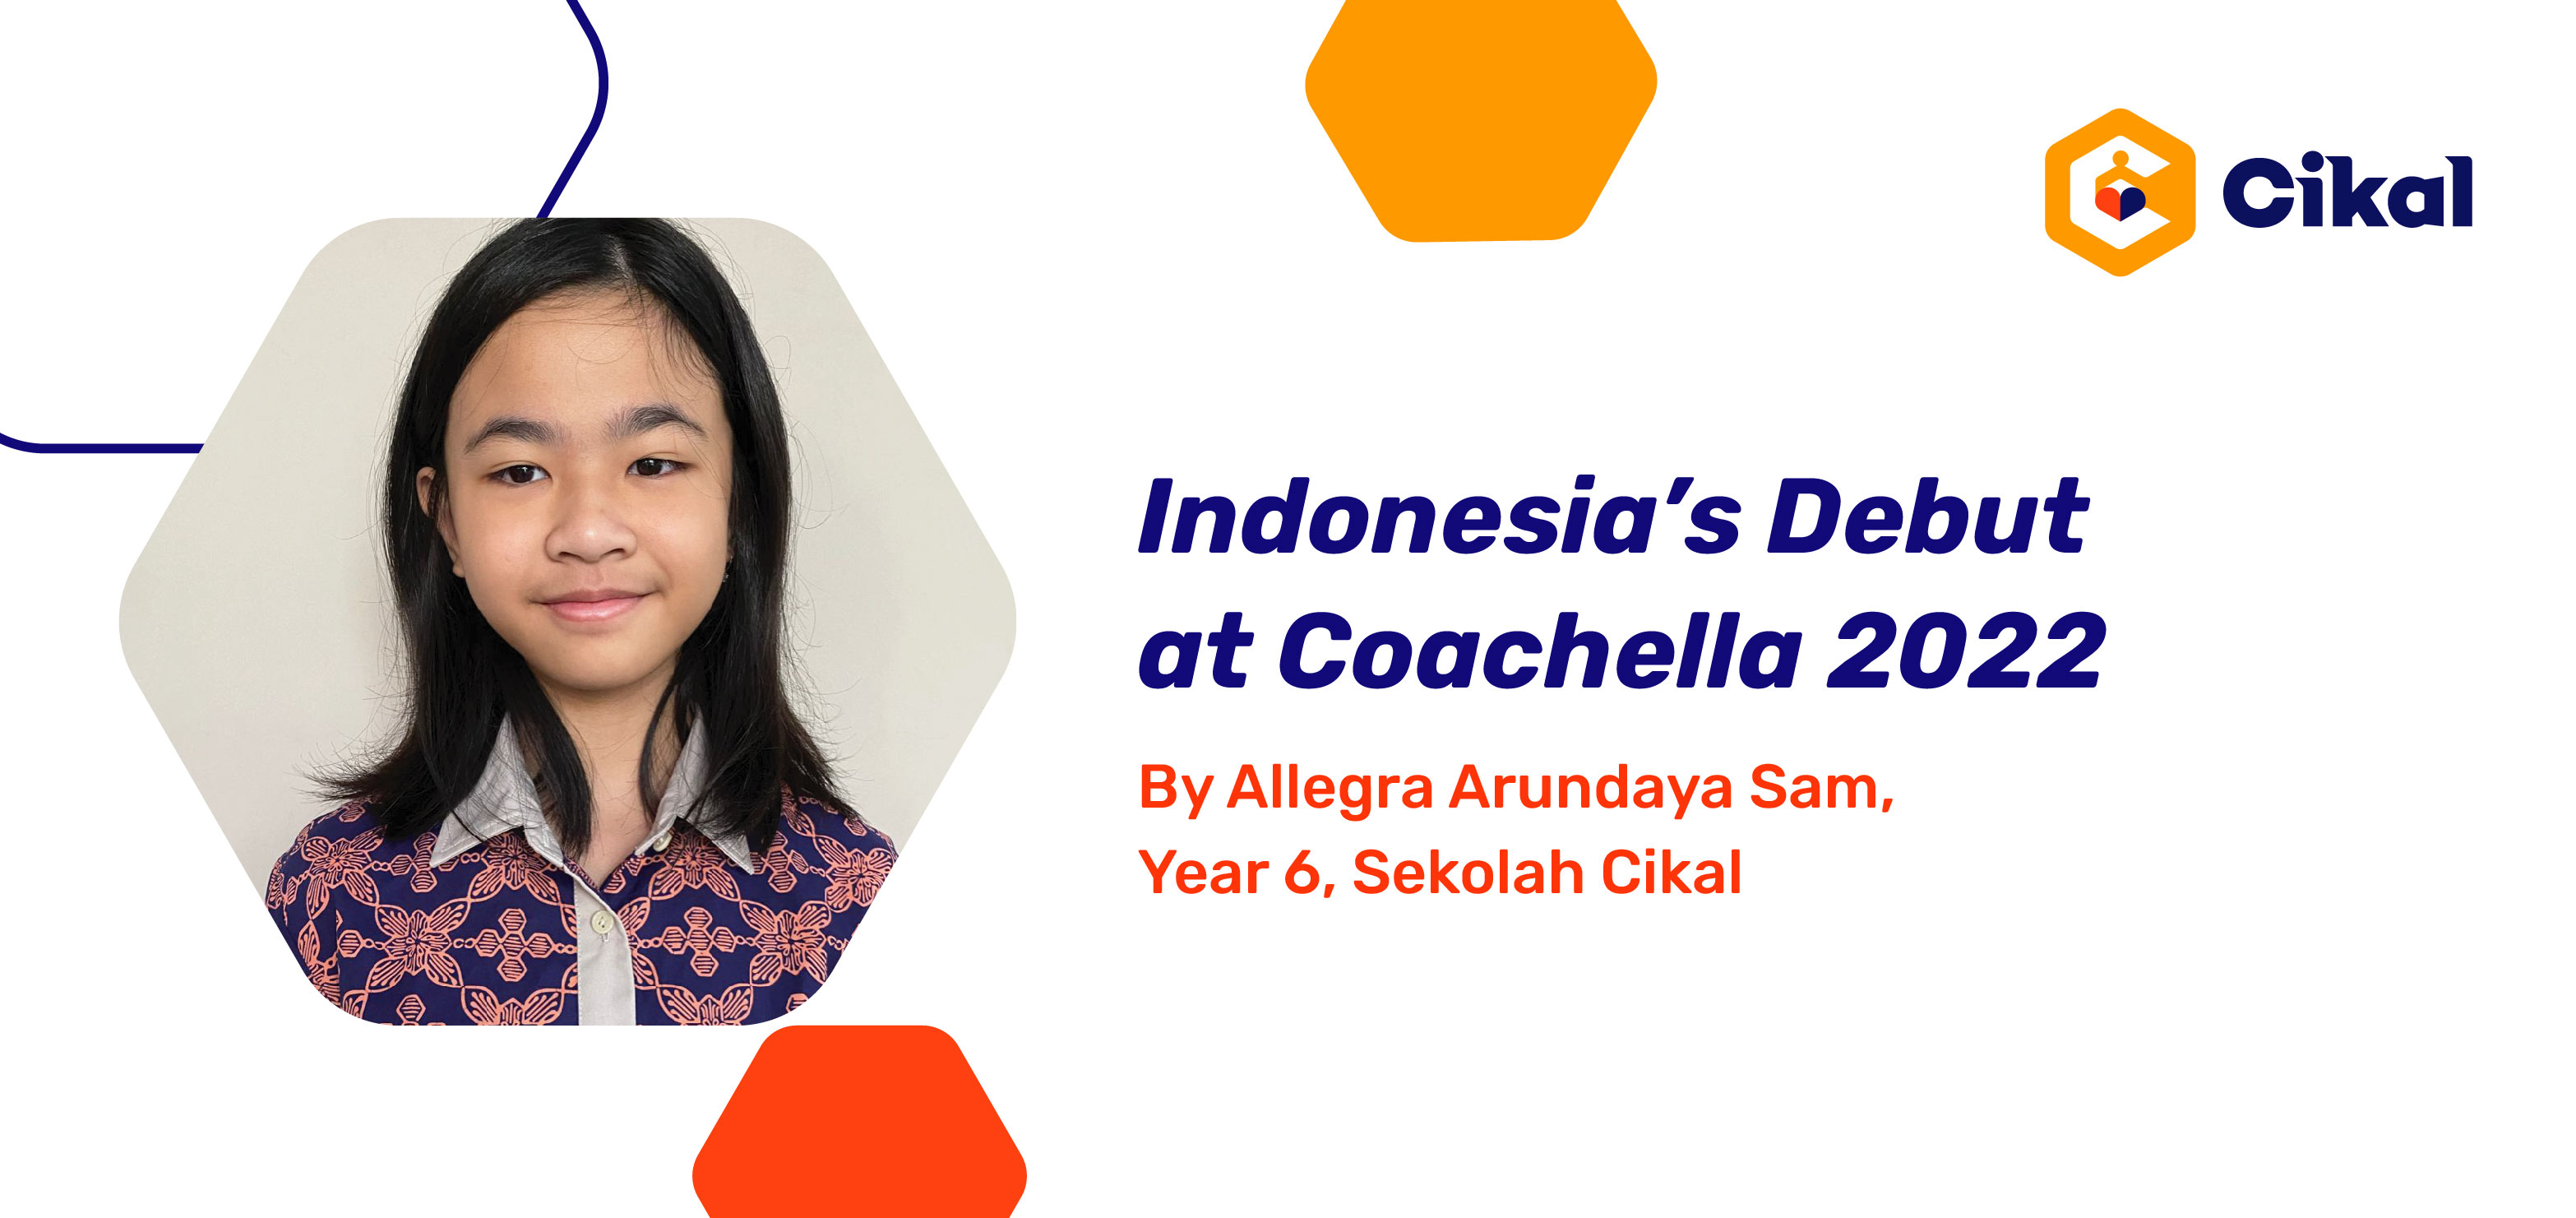 Indonesia’s Debut at Coachella 2022 By Allegra Arundaya Sam, Year 6, Sekolah Cikal 